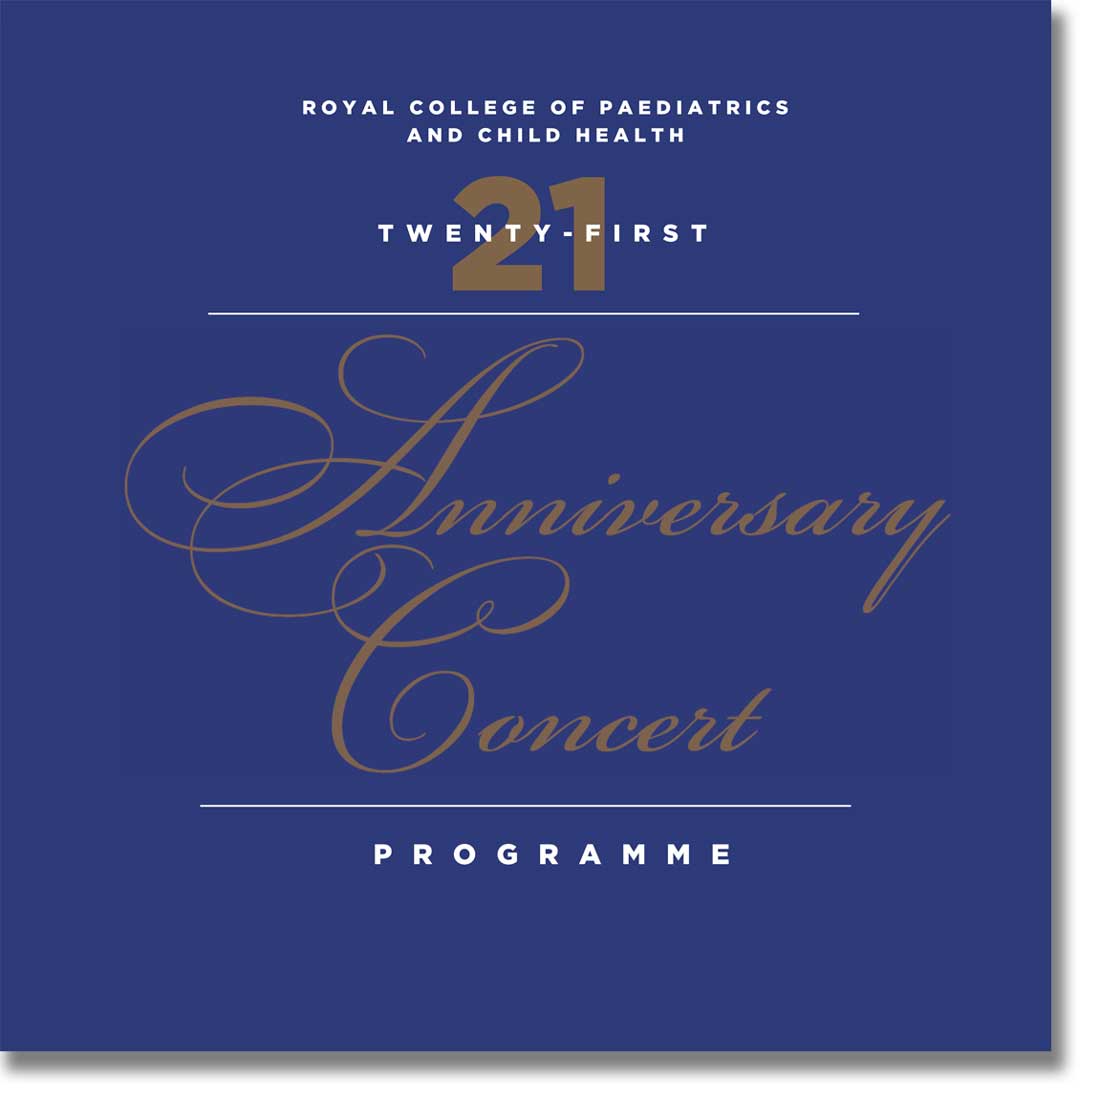 RCPCH anniversary concert programme